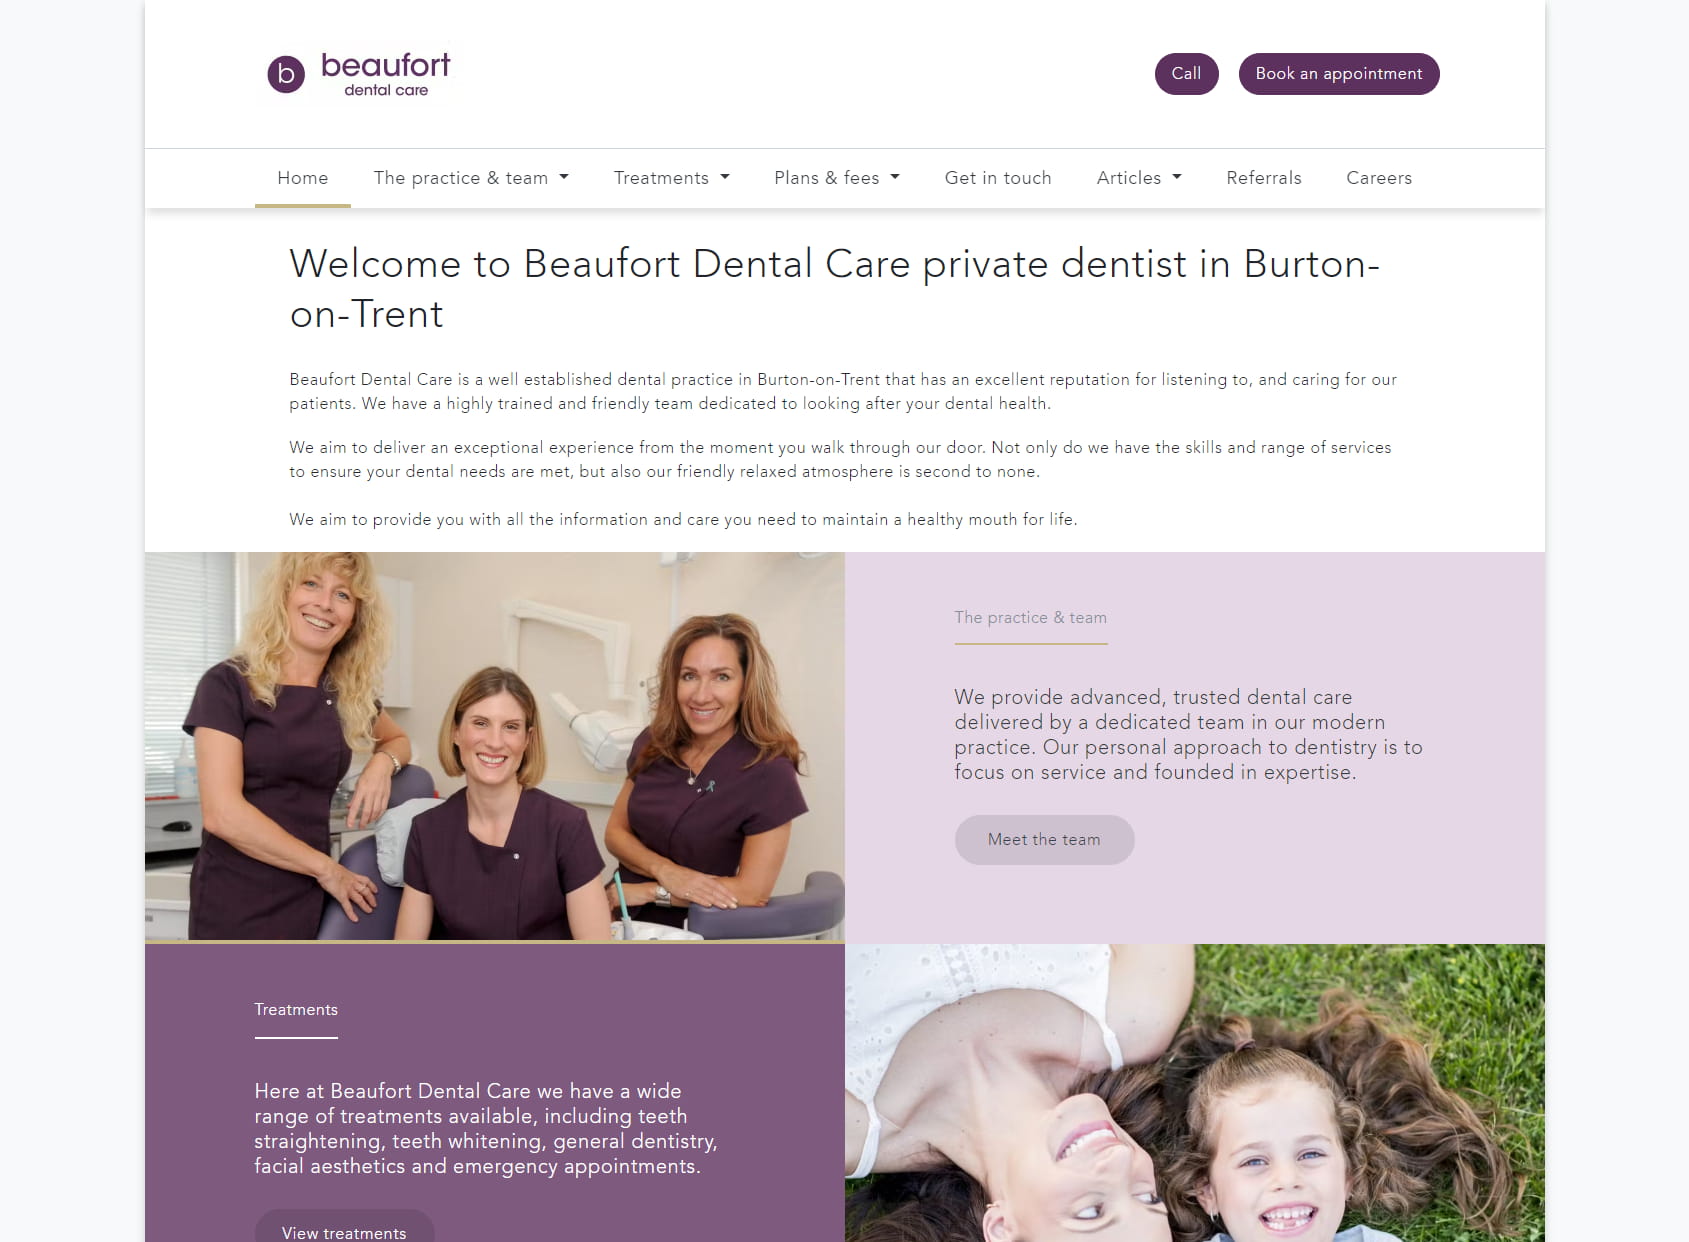 Beaufort Dental Health Centre